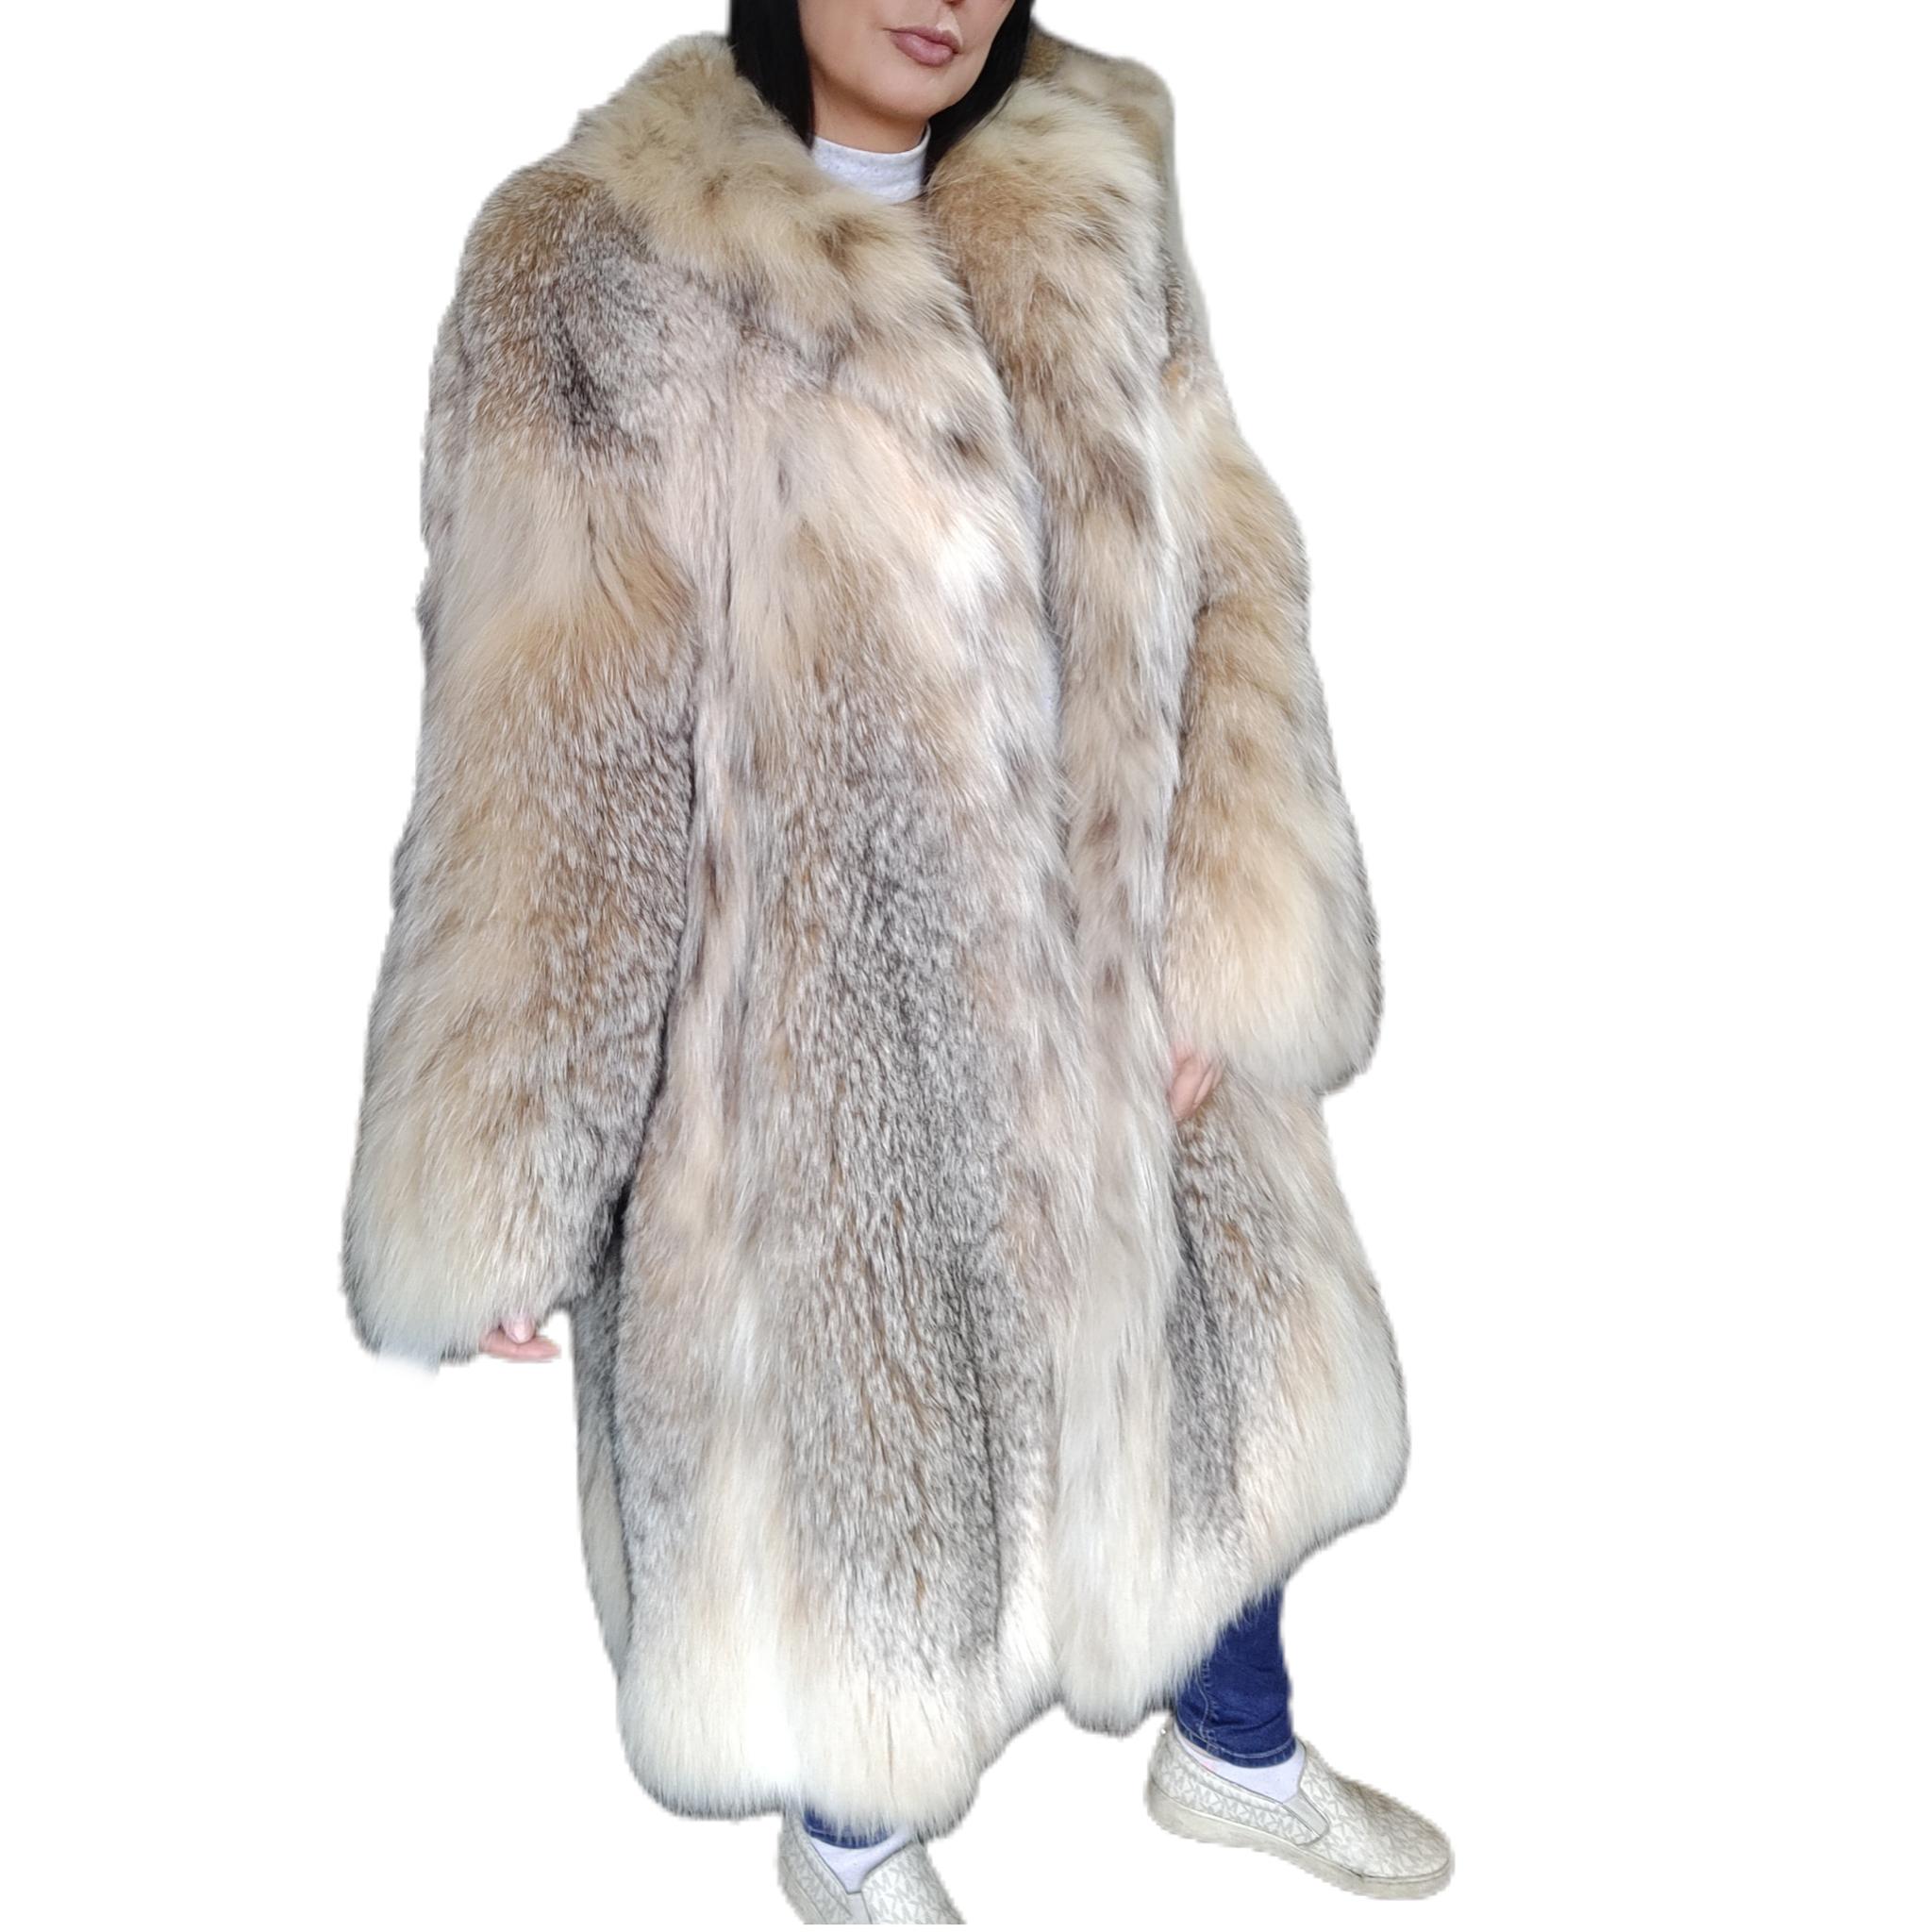 Women's Brand new lightweight lynx fur coat size 14 L